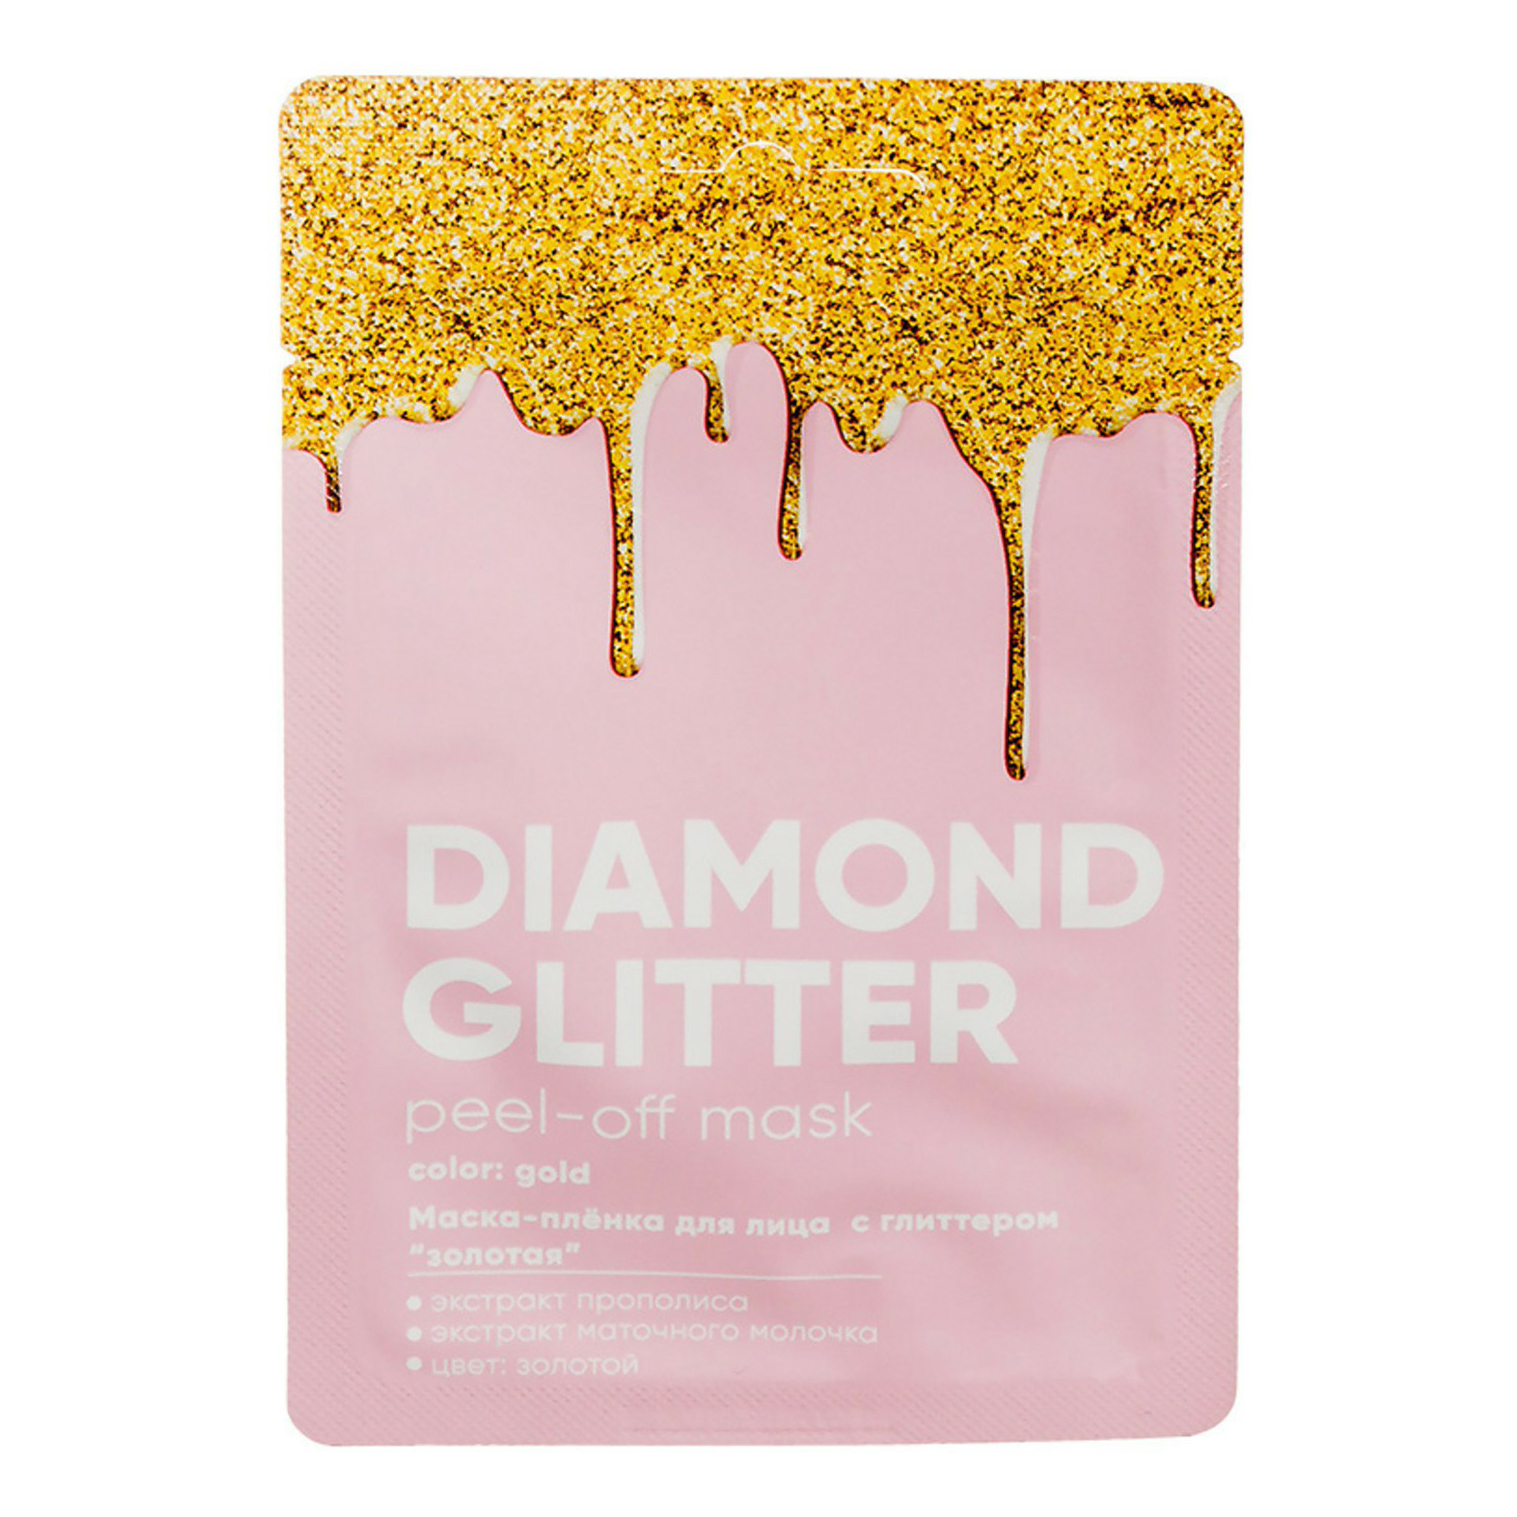 Маска-пленка для лица Л'Этуаль Funky Fun Diamond glitter с глиттером золотая 10 г золотая маска the gold mask